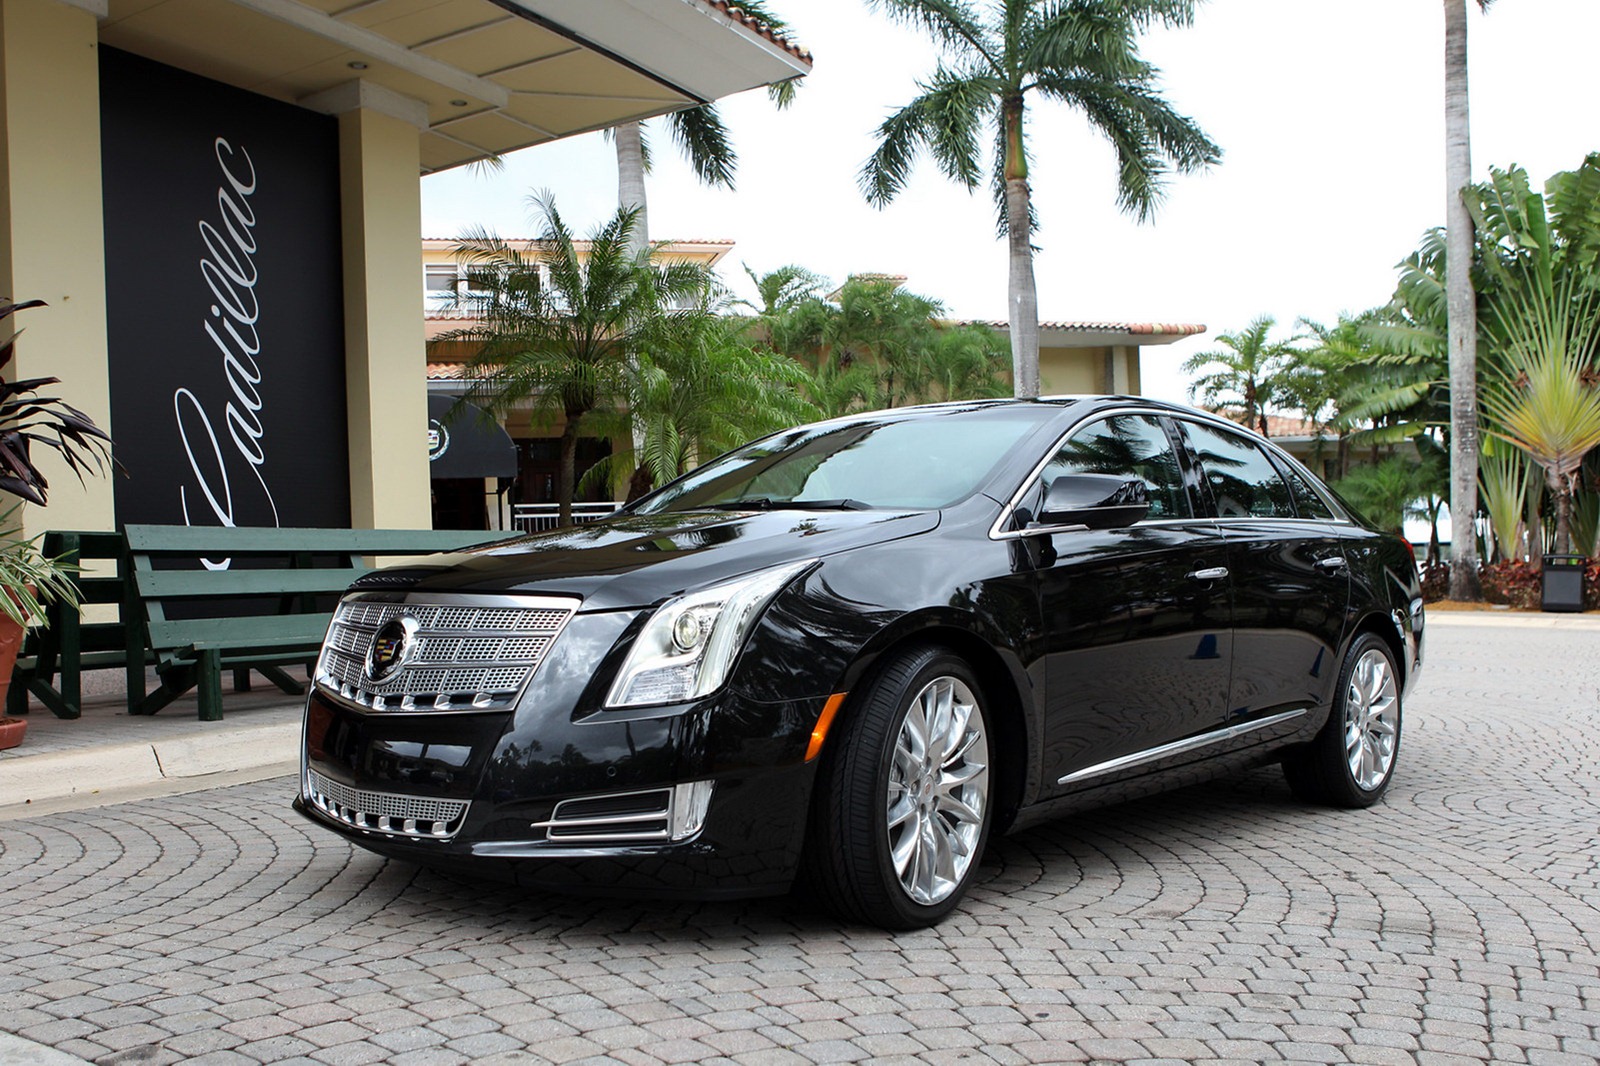 2013 Cadillac XTS shows off its size | Automotor Blog